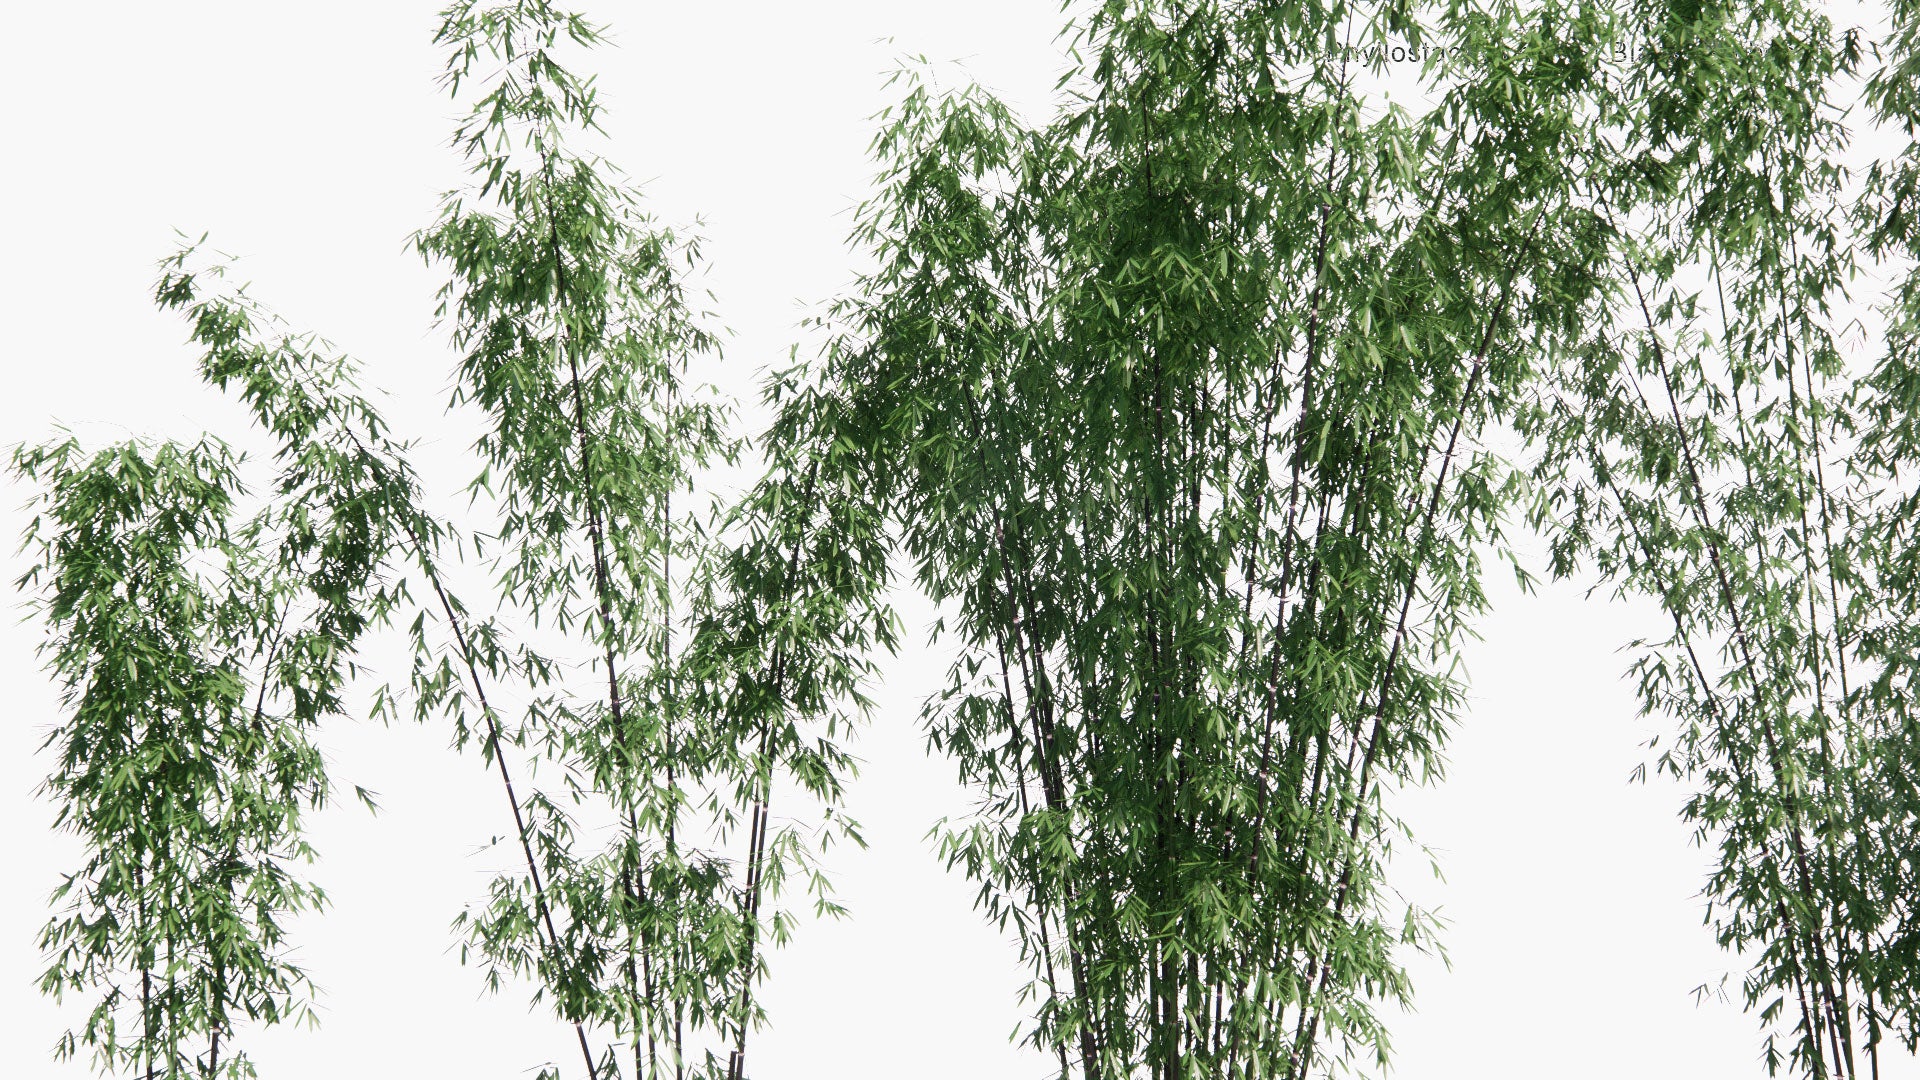 Low Poly Phyllostachys Nigra - Black Bamboo, Purple Bamboo (3D Model)